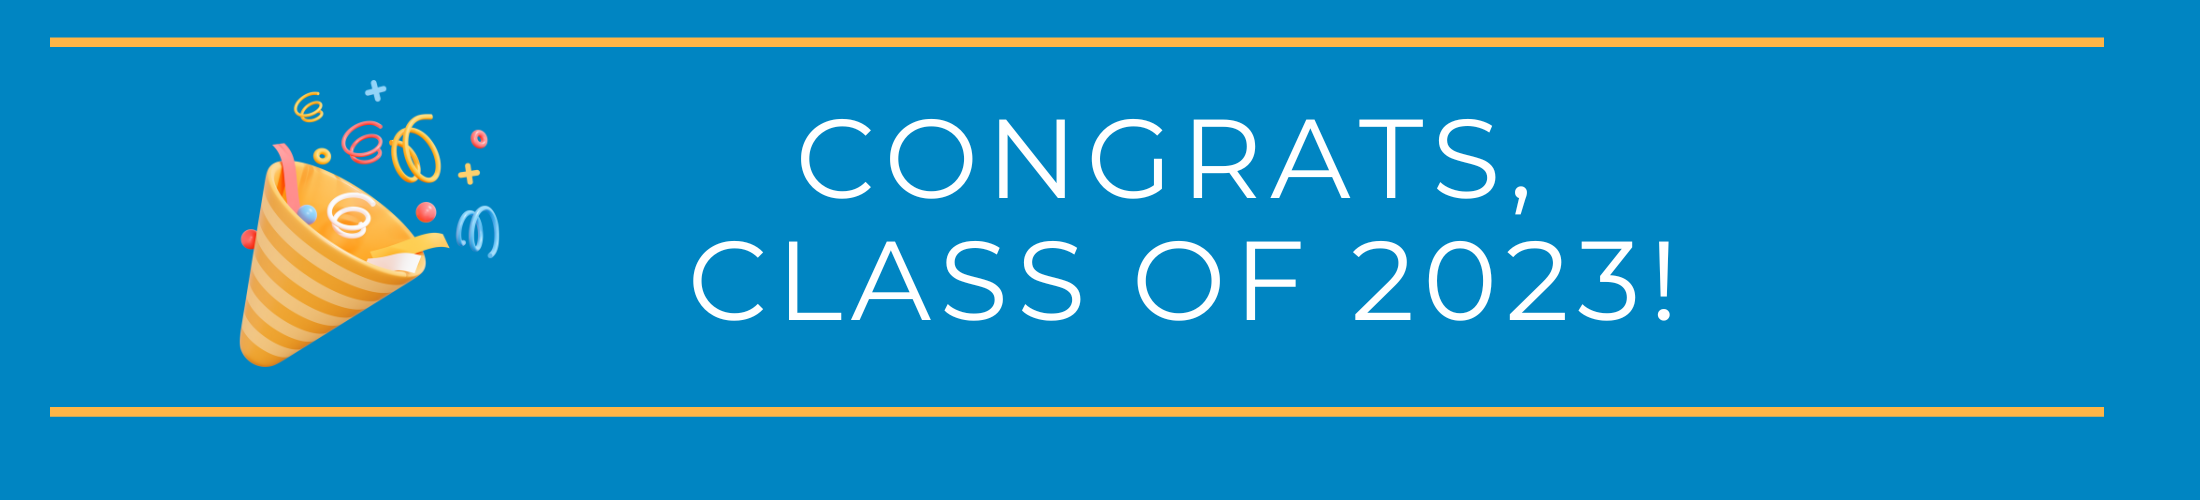 Congrats to Galin Education’s Class of 2023!